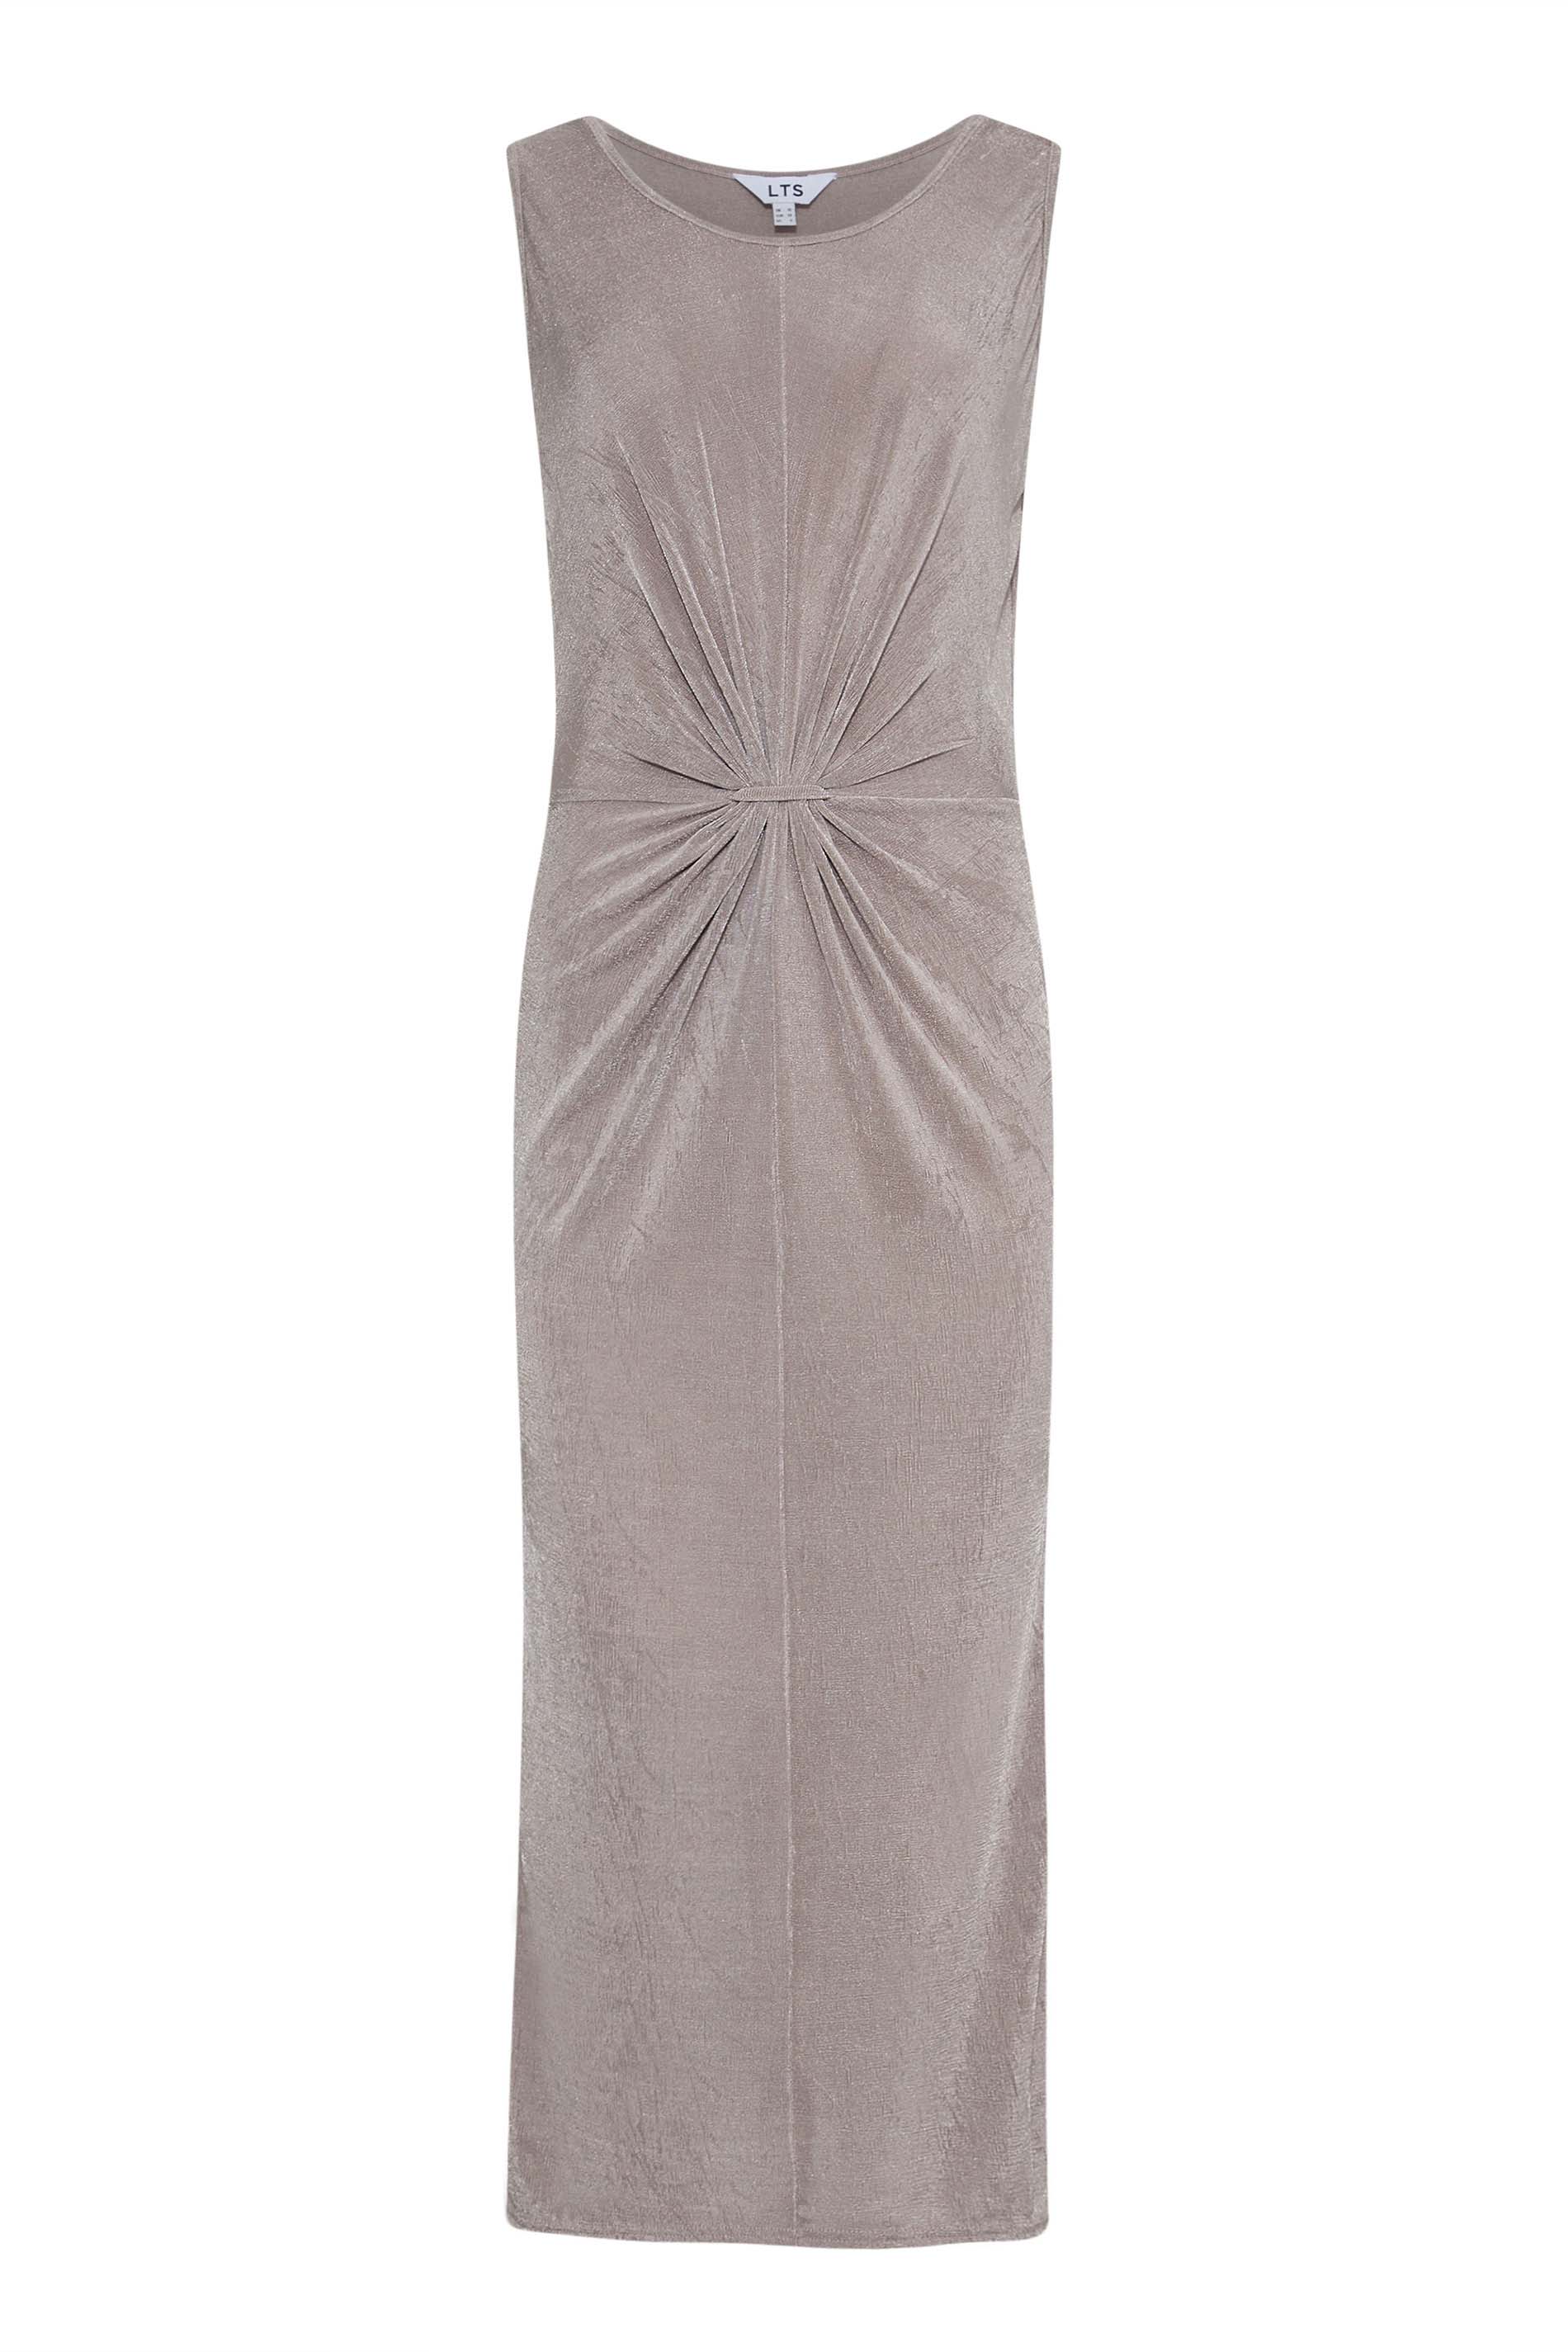 LTS Tall Women's Silver Knot Front Midi Dress | Long Tall Sally 2